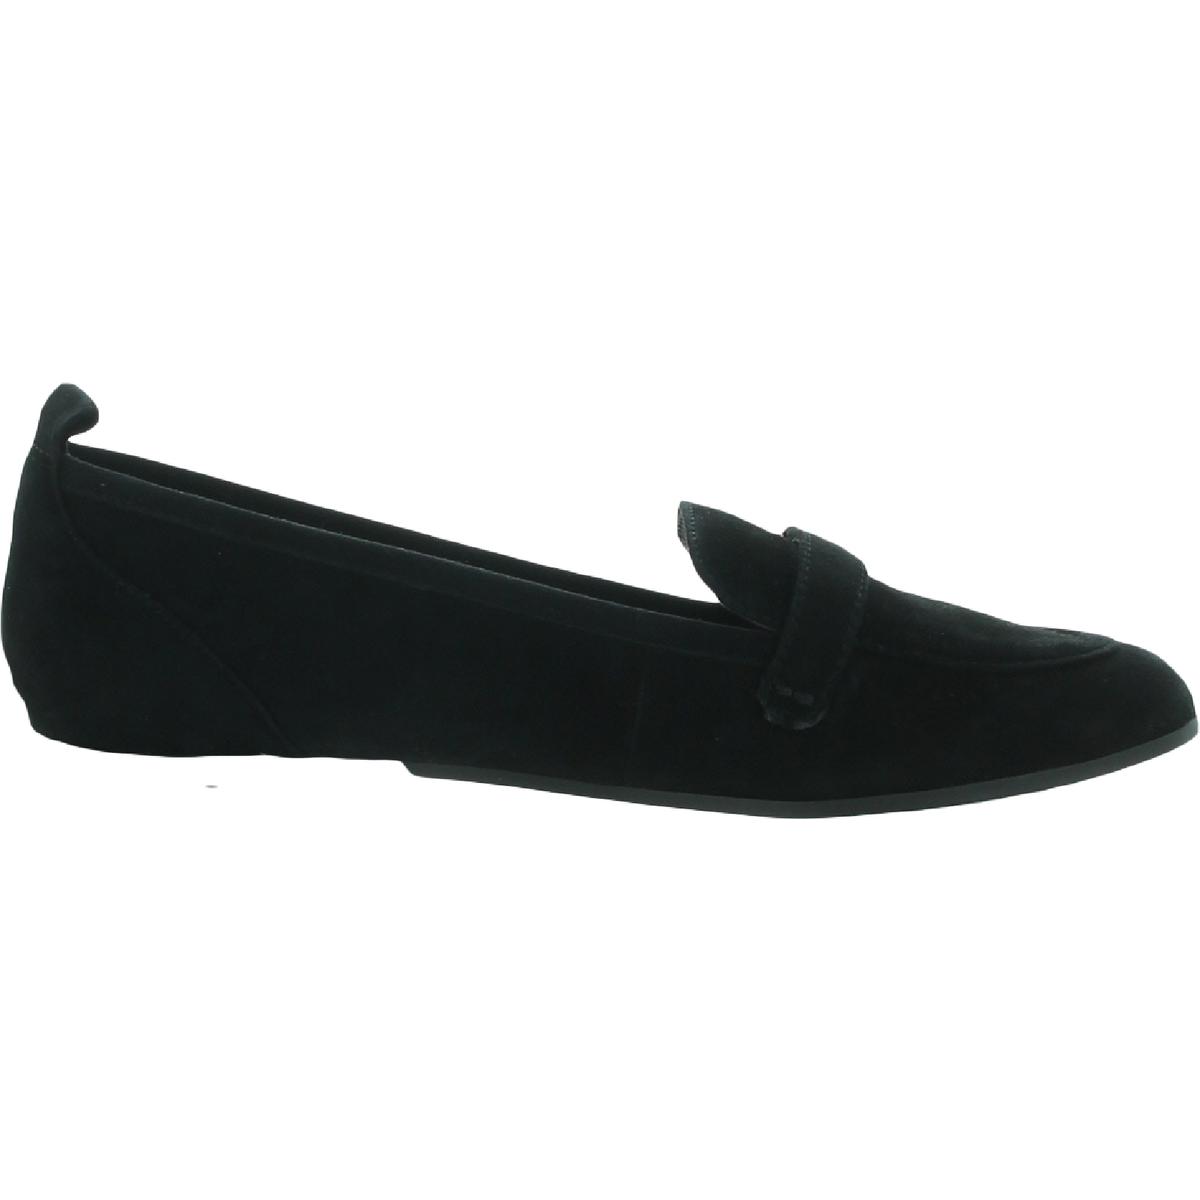 Giani Bernini Womens AXTONN Patent Leather Slip On Loafers Shoes BHFO 9040